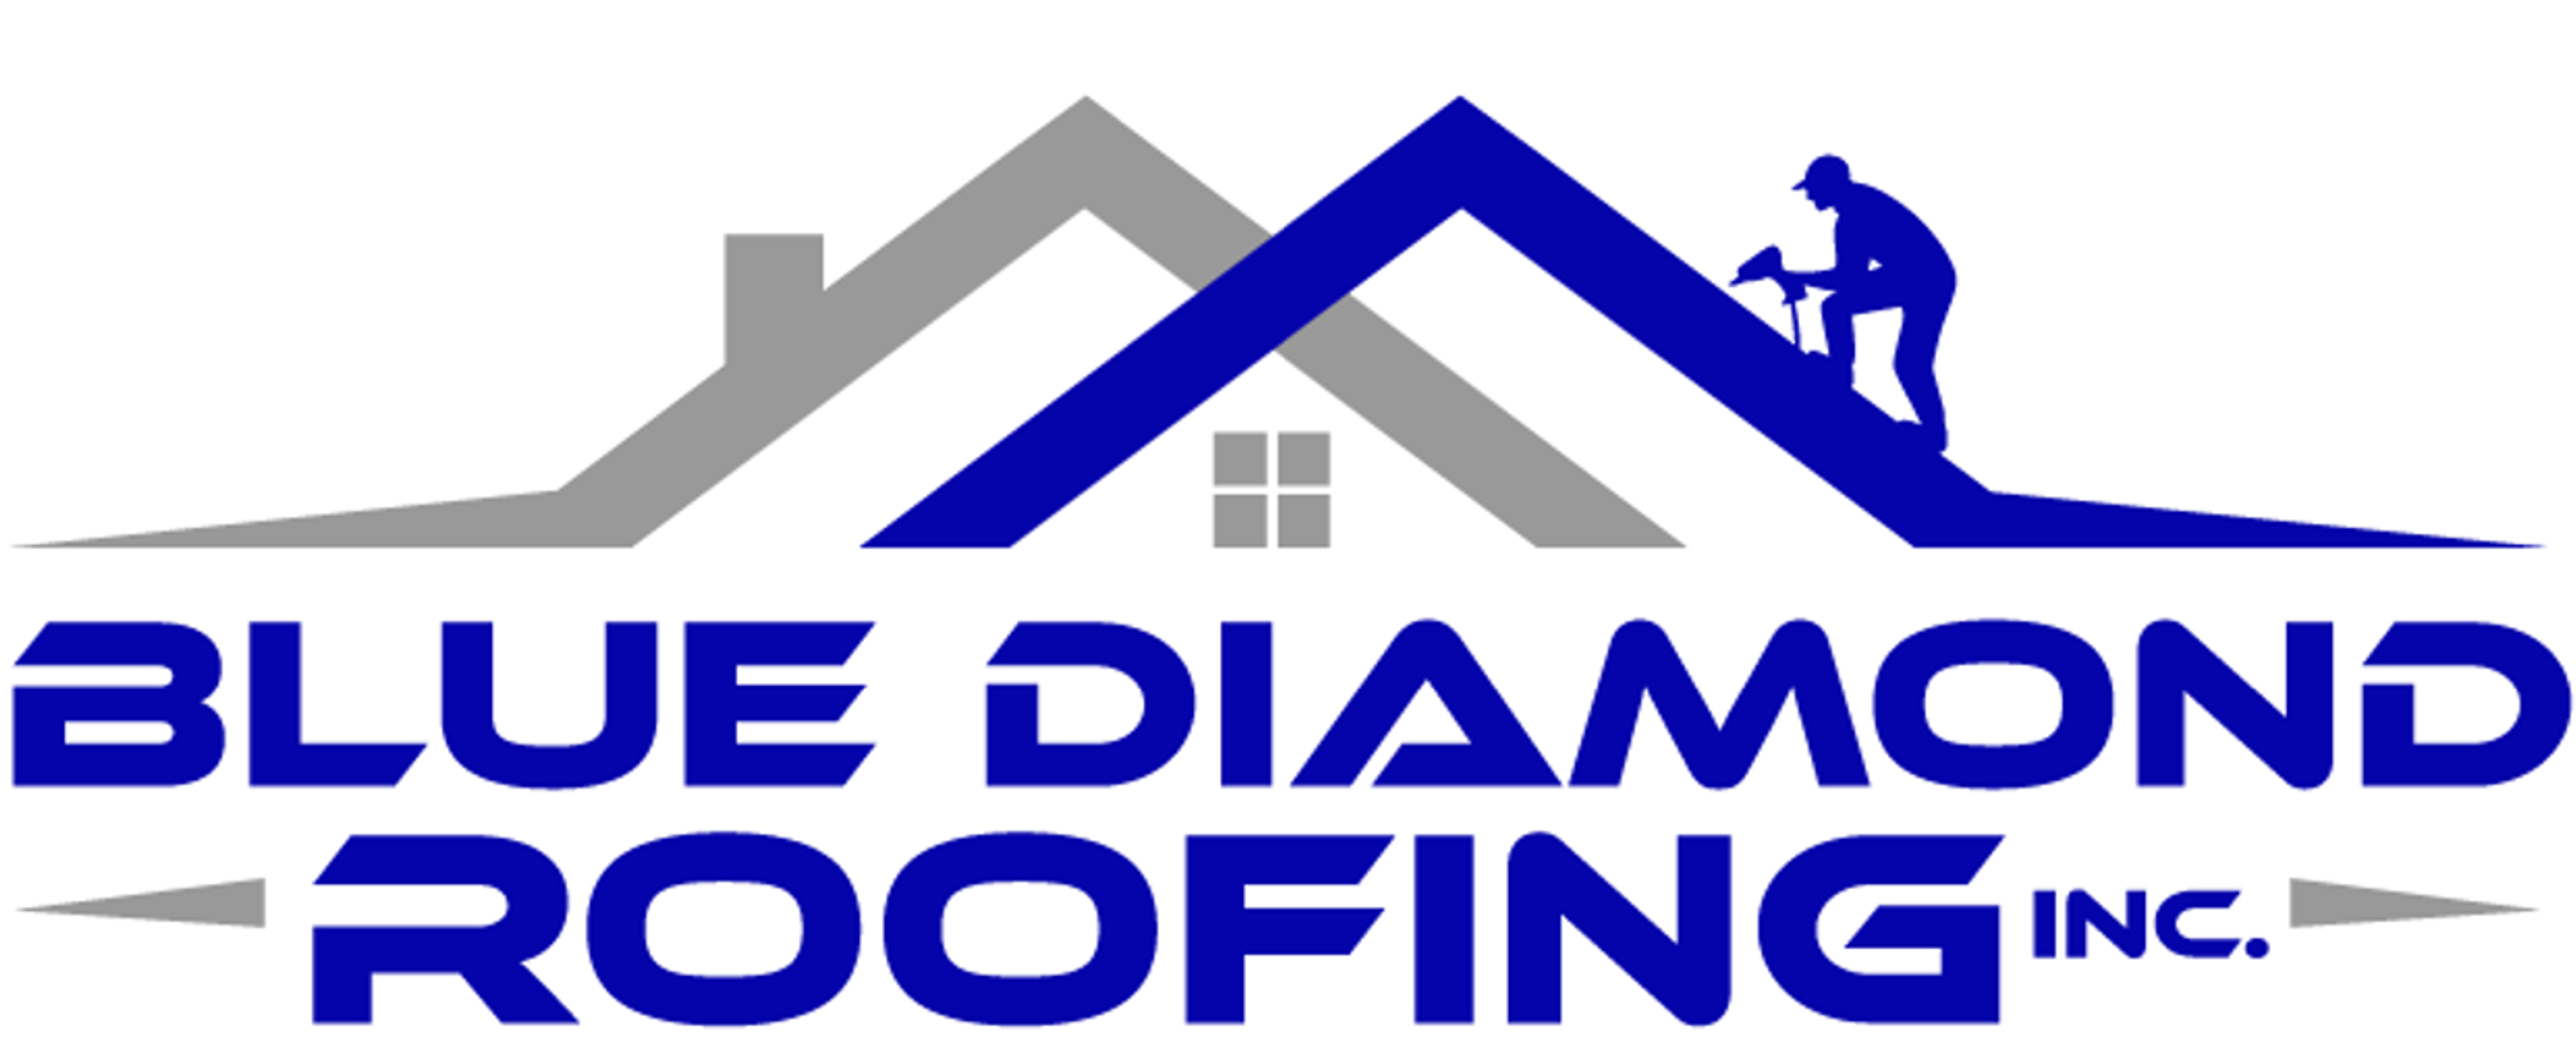 Blue Diamond Roofing, Inc. Logo